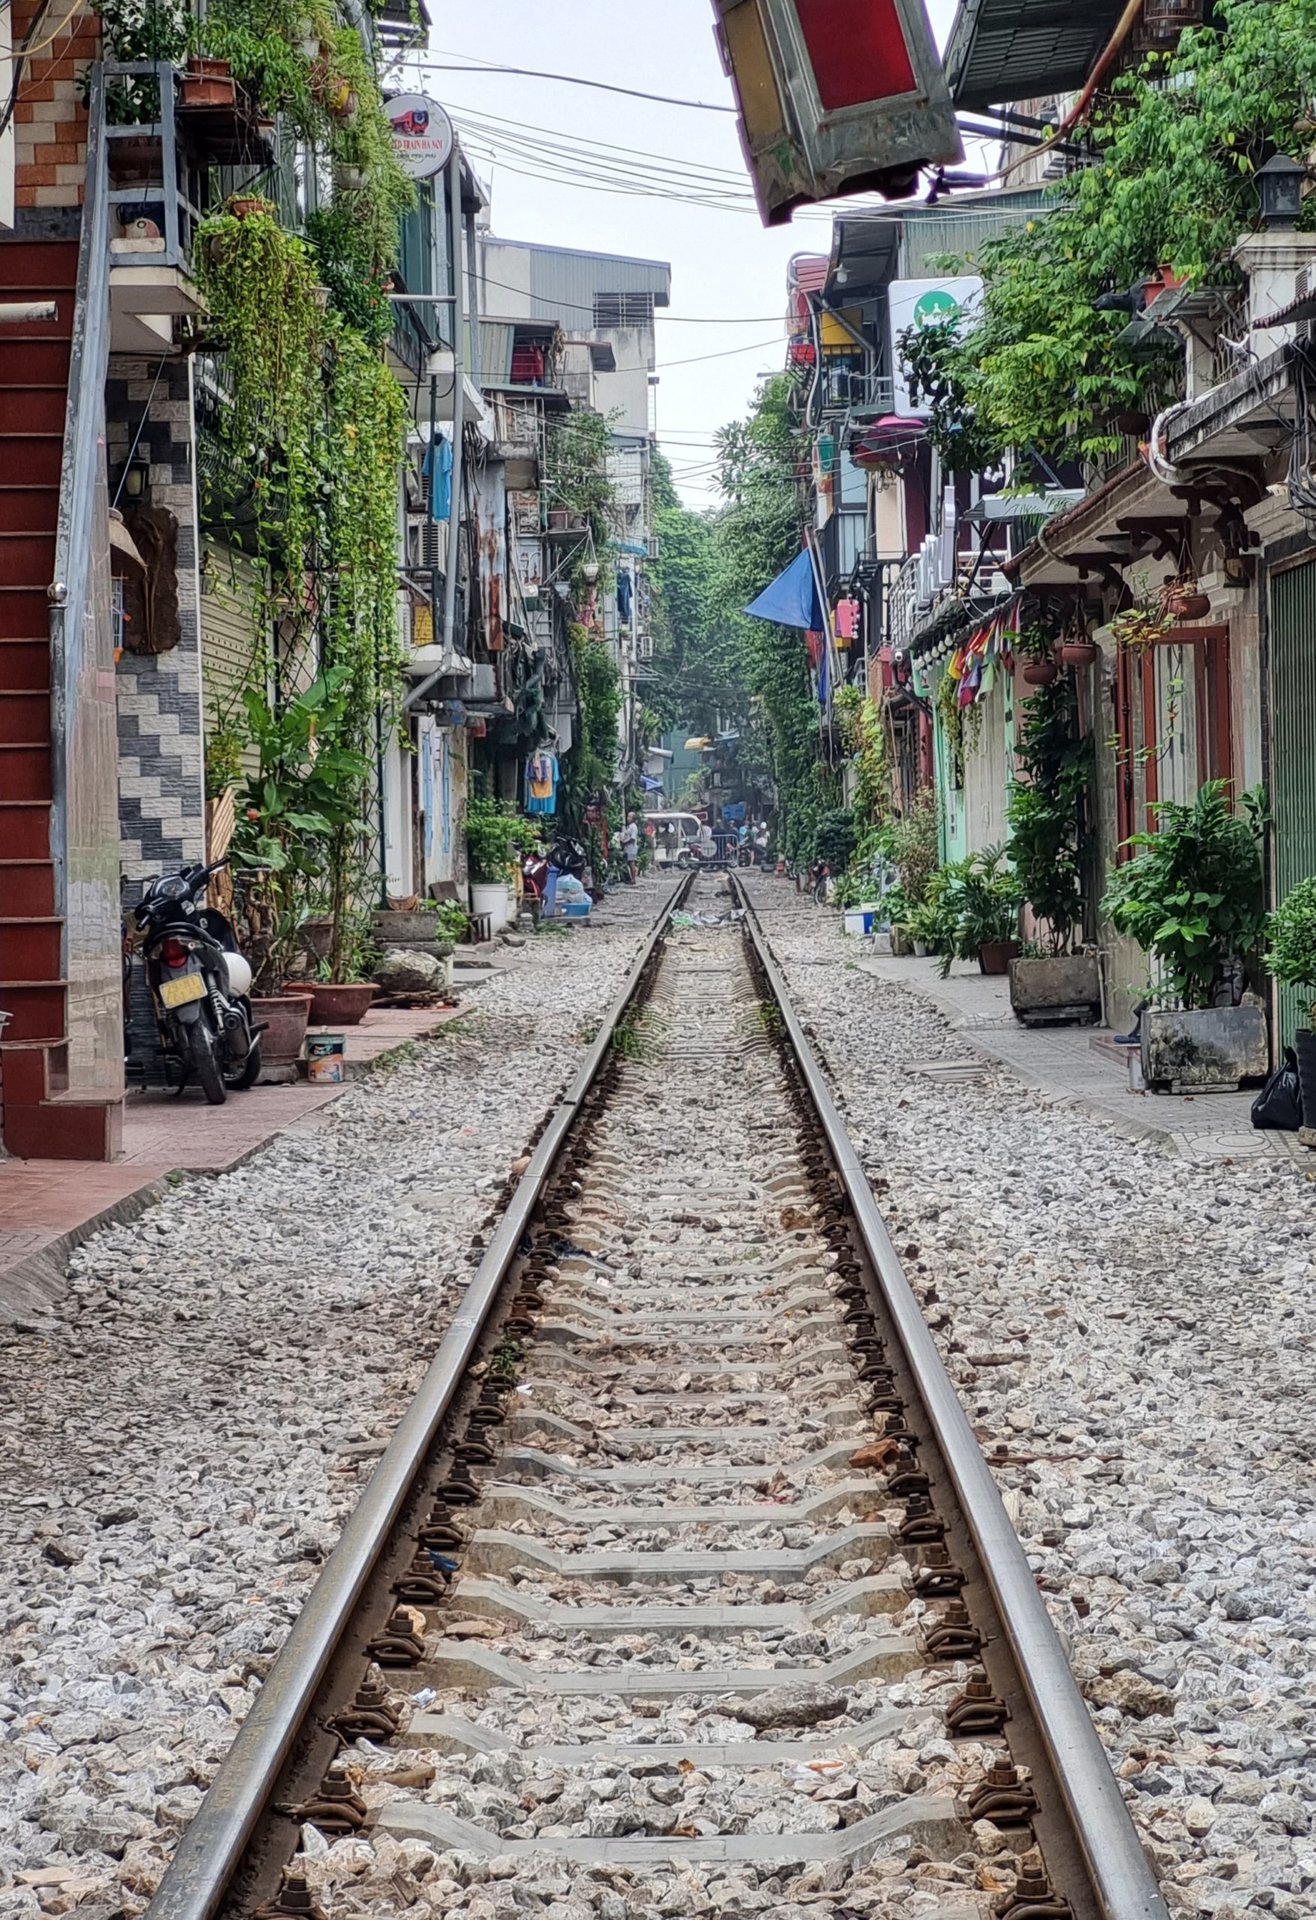 galaxy s21 fe camera sample of train tracks passing through a residential neighborhood in Hanoi